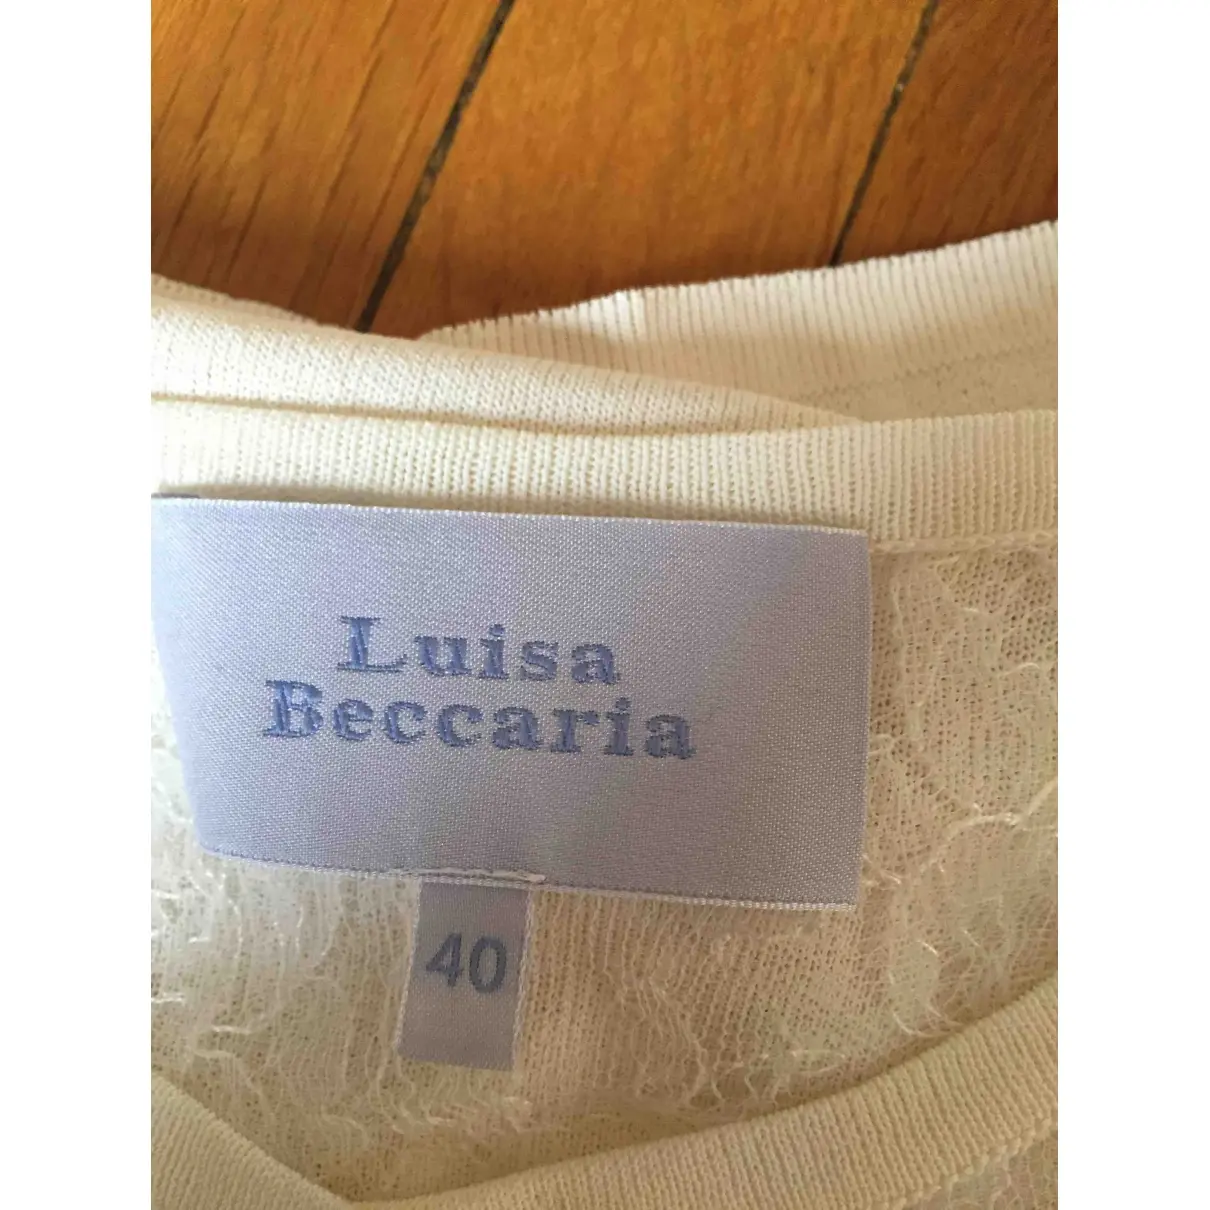 Buy Luisa Beccaria Knitwear online